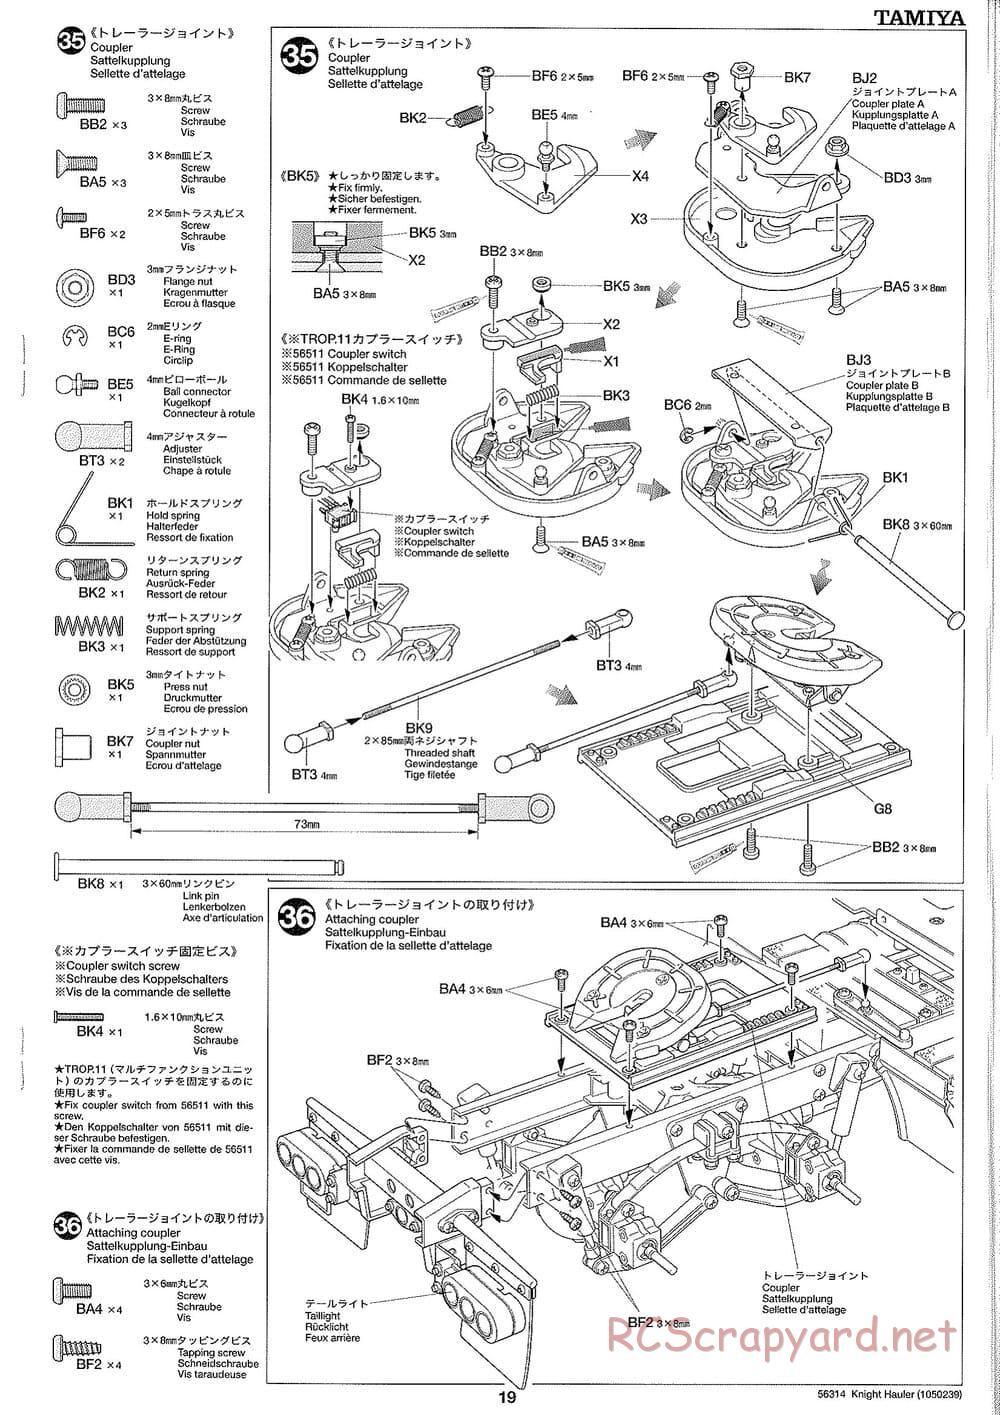 Tamiya - Knight Hauler Tractor Truck Chassis - Manual - Page 19